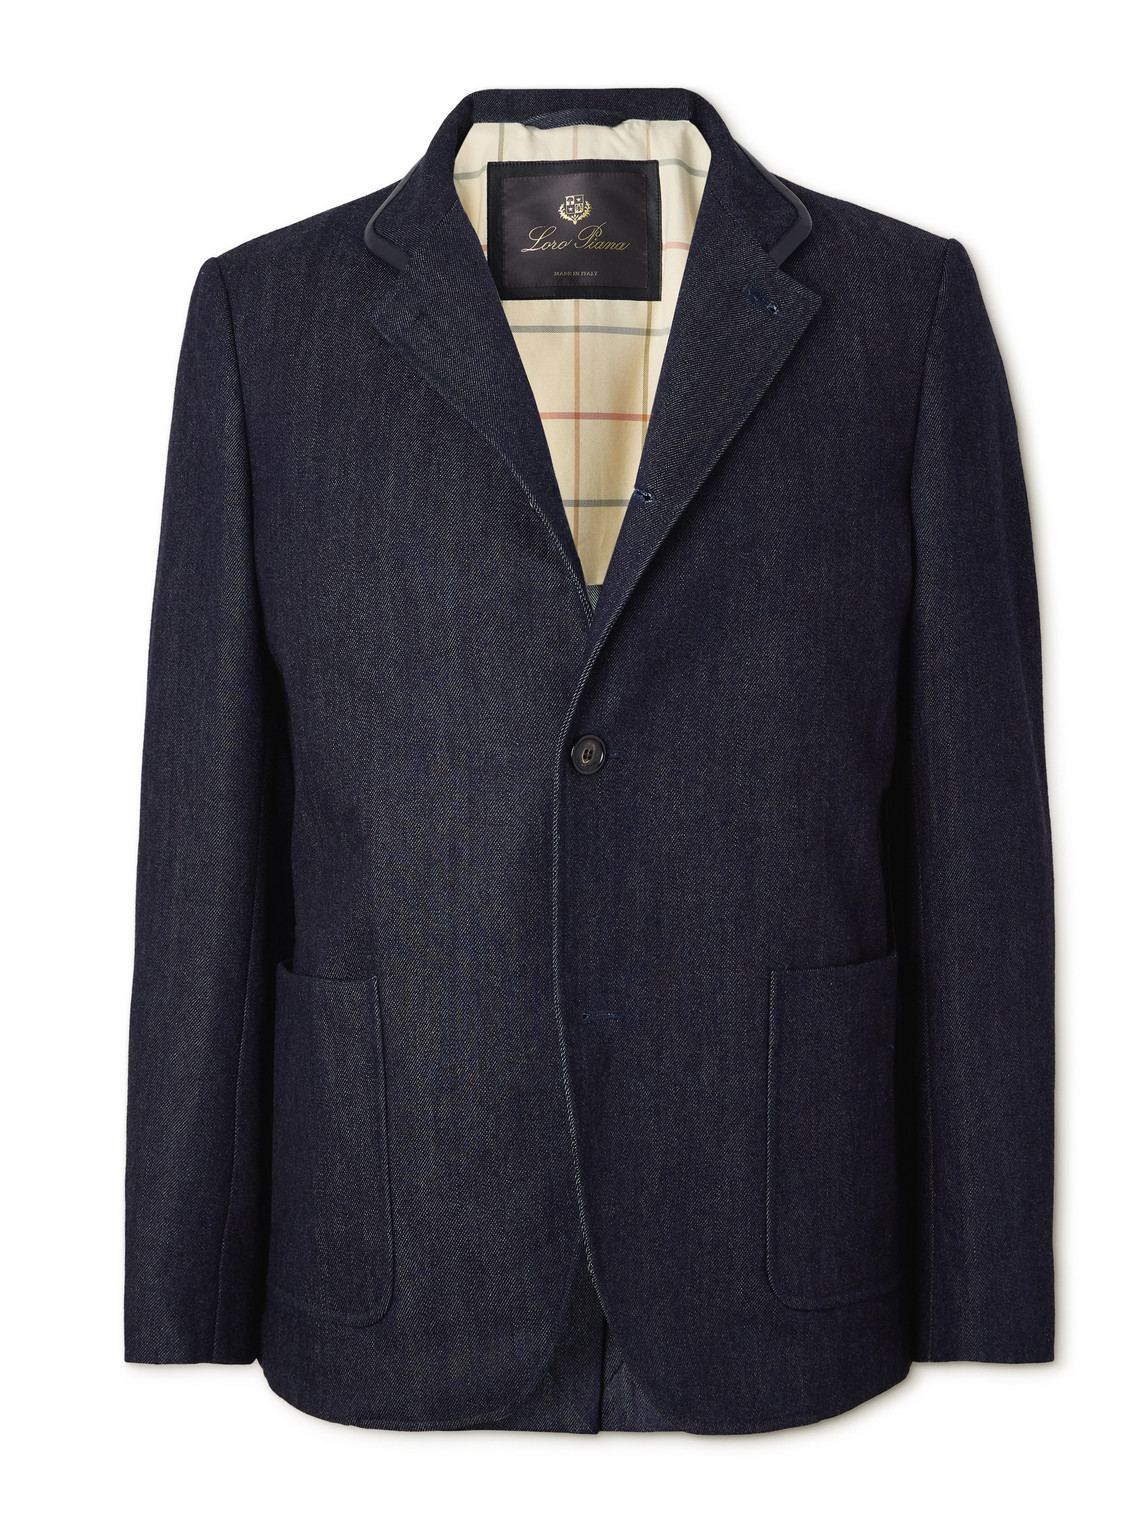 Spagna Leather-Trimmed Cotton and Cashmere-Blend Denim Jacket